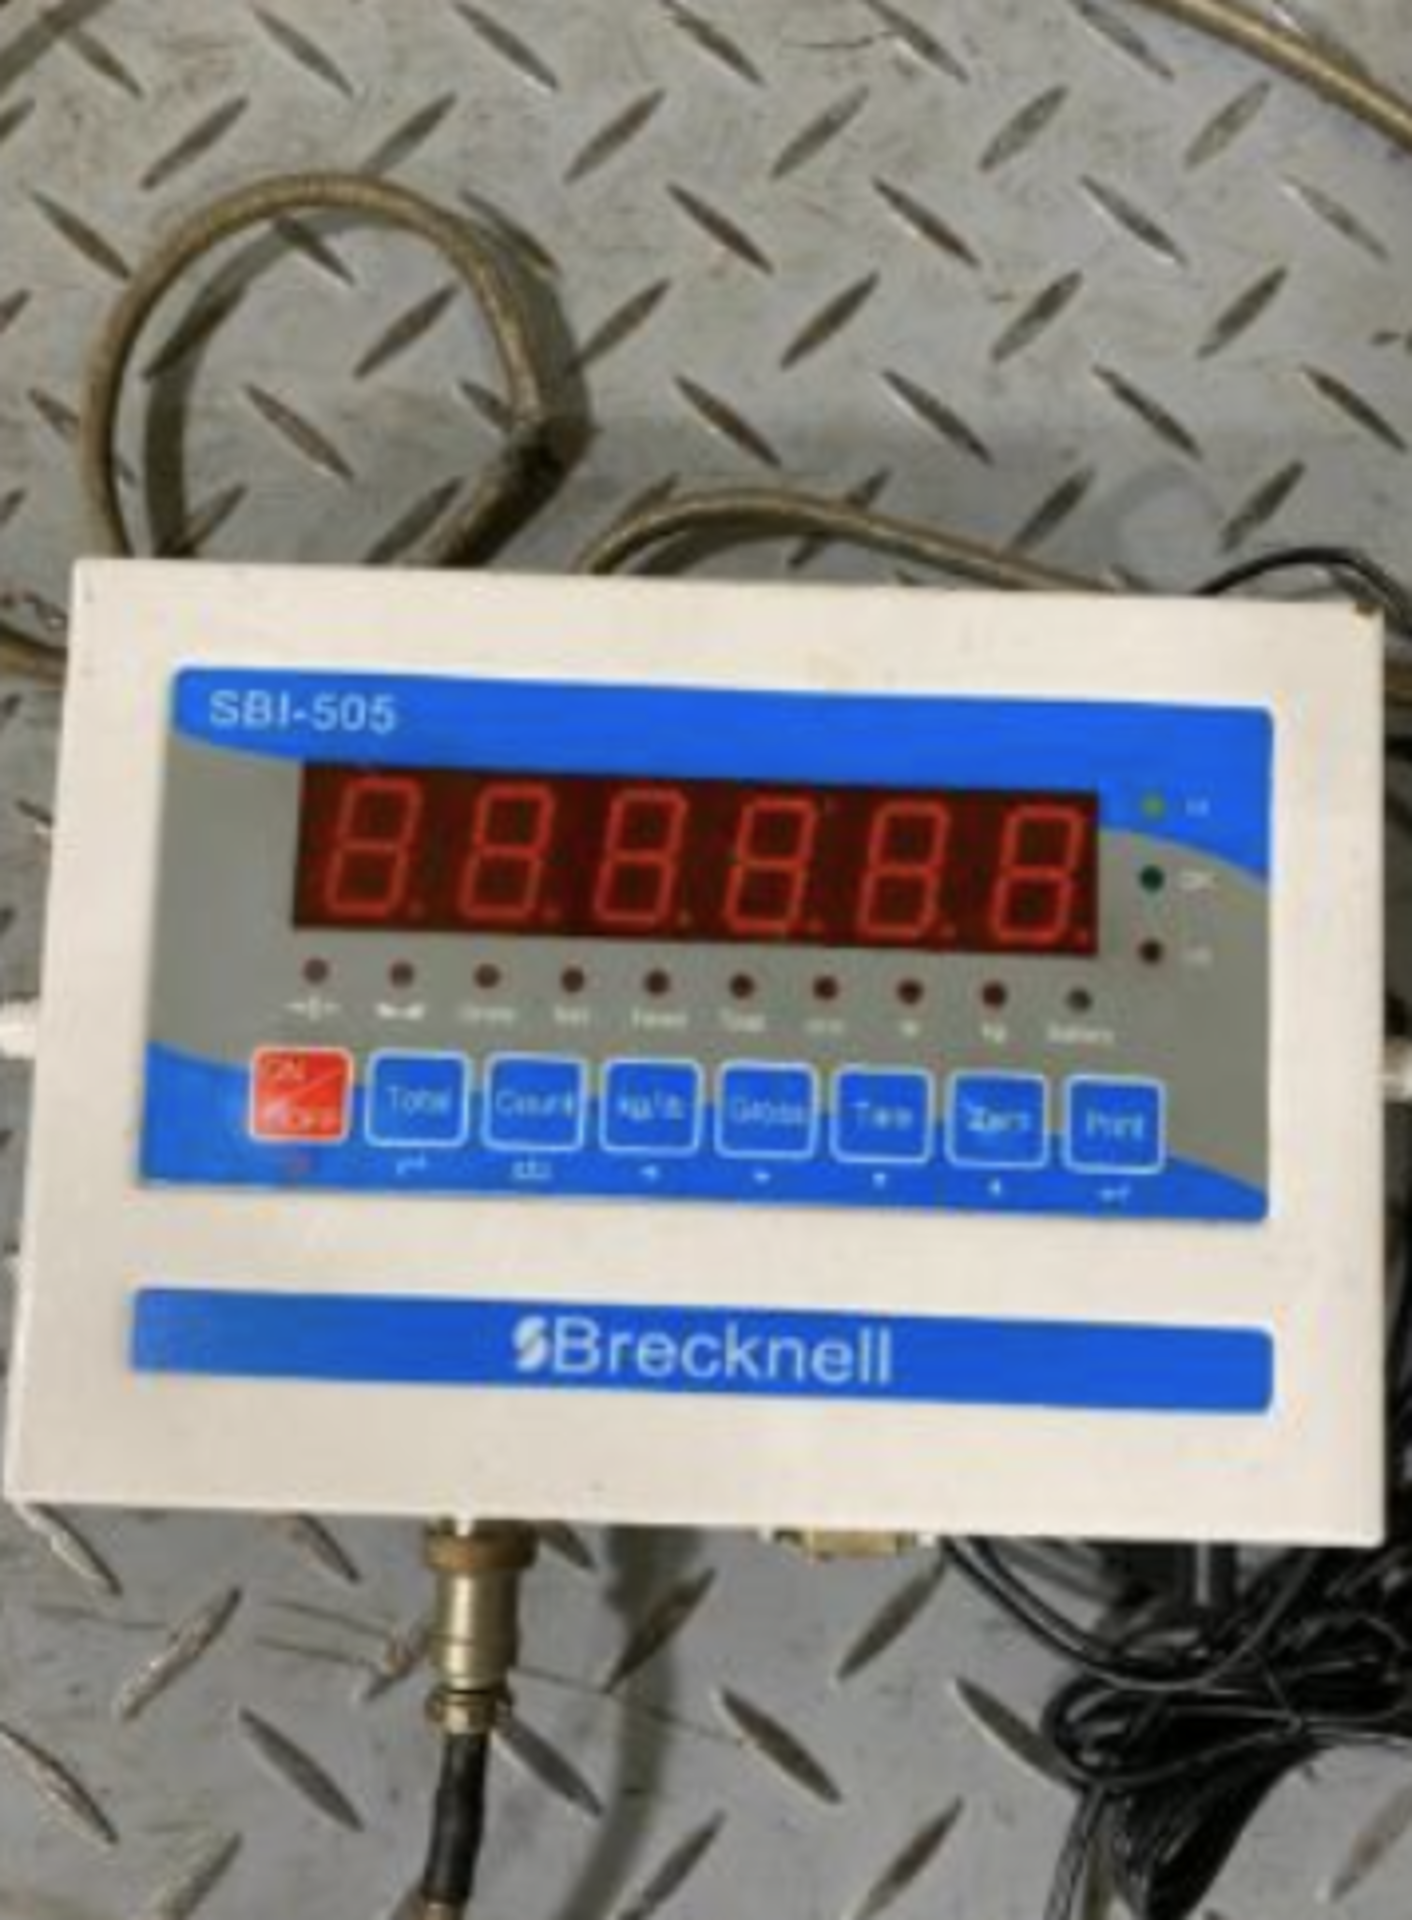 Brecknell Pallet Scale, Model SBI-505 - Image 3 of 3